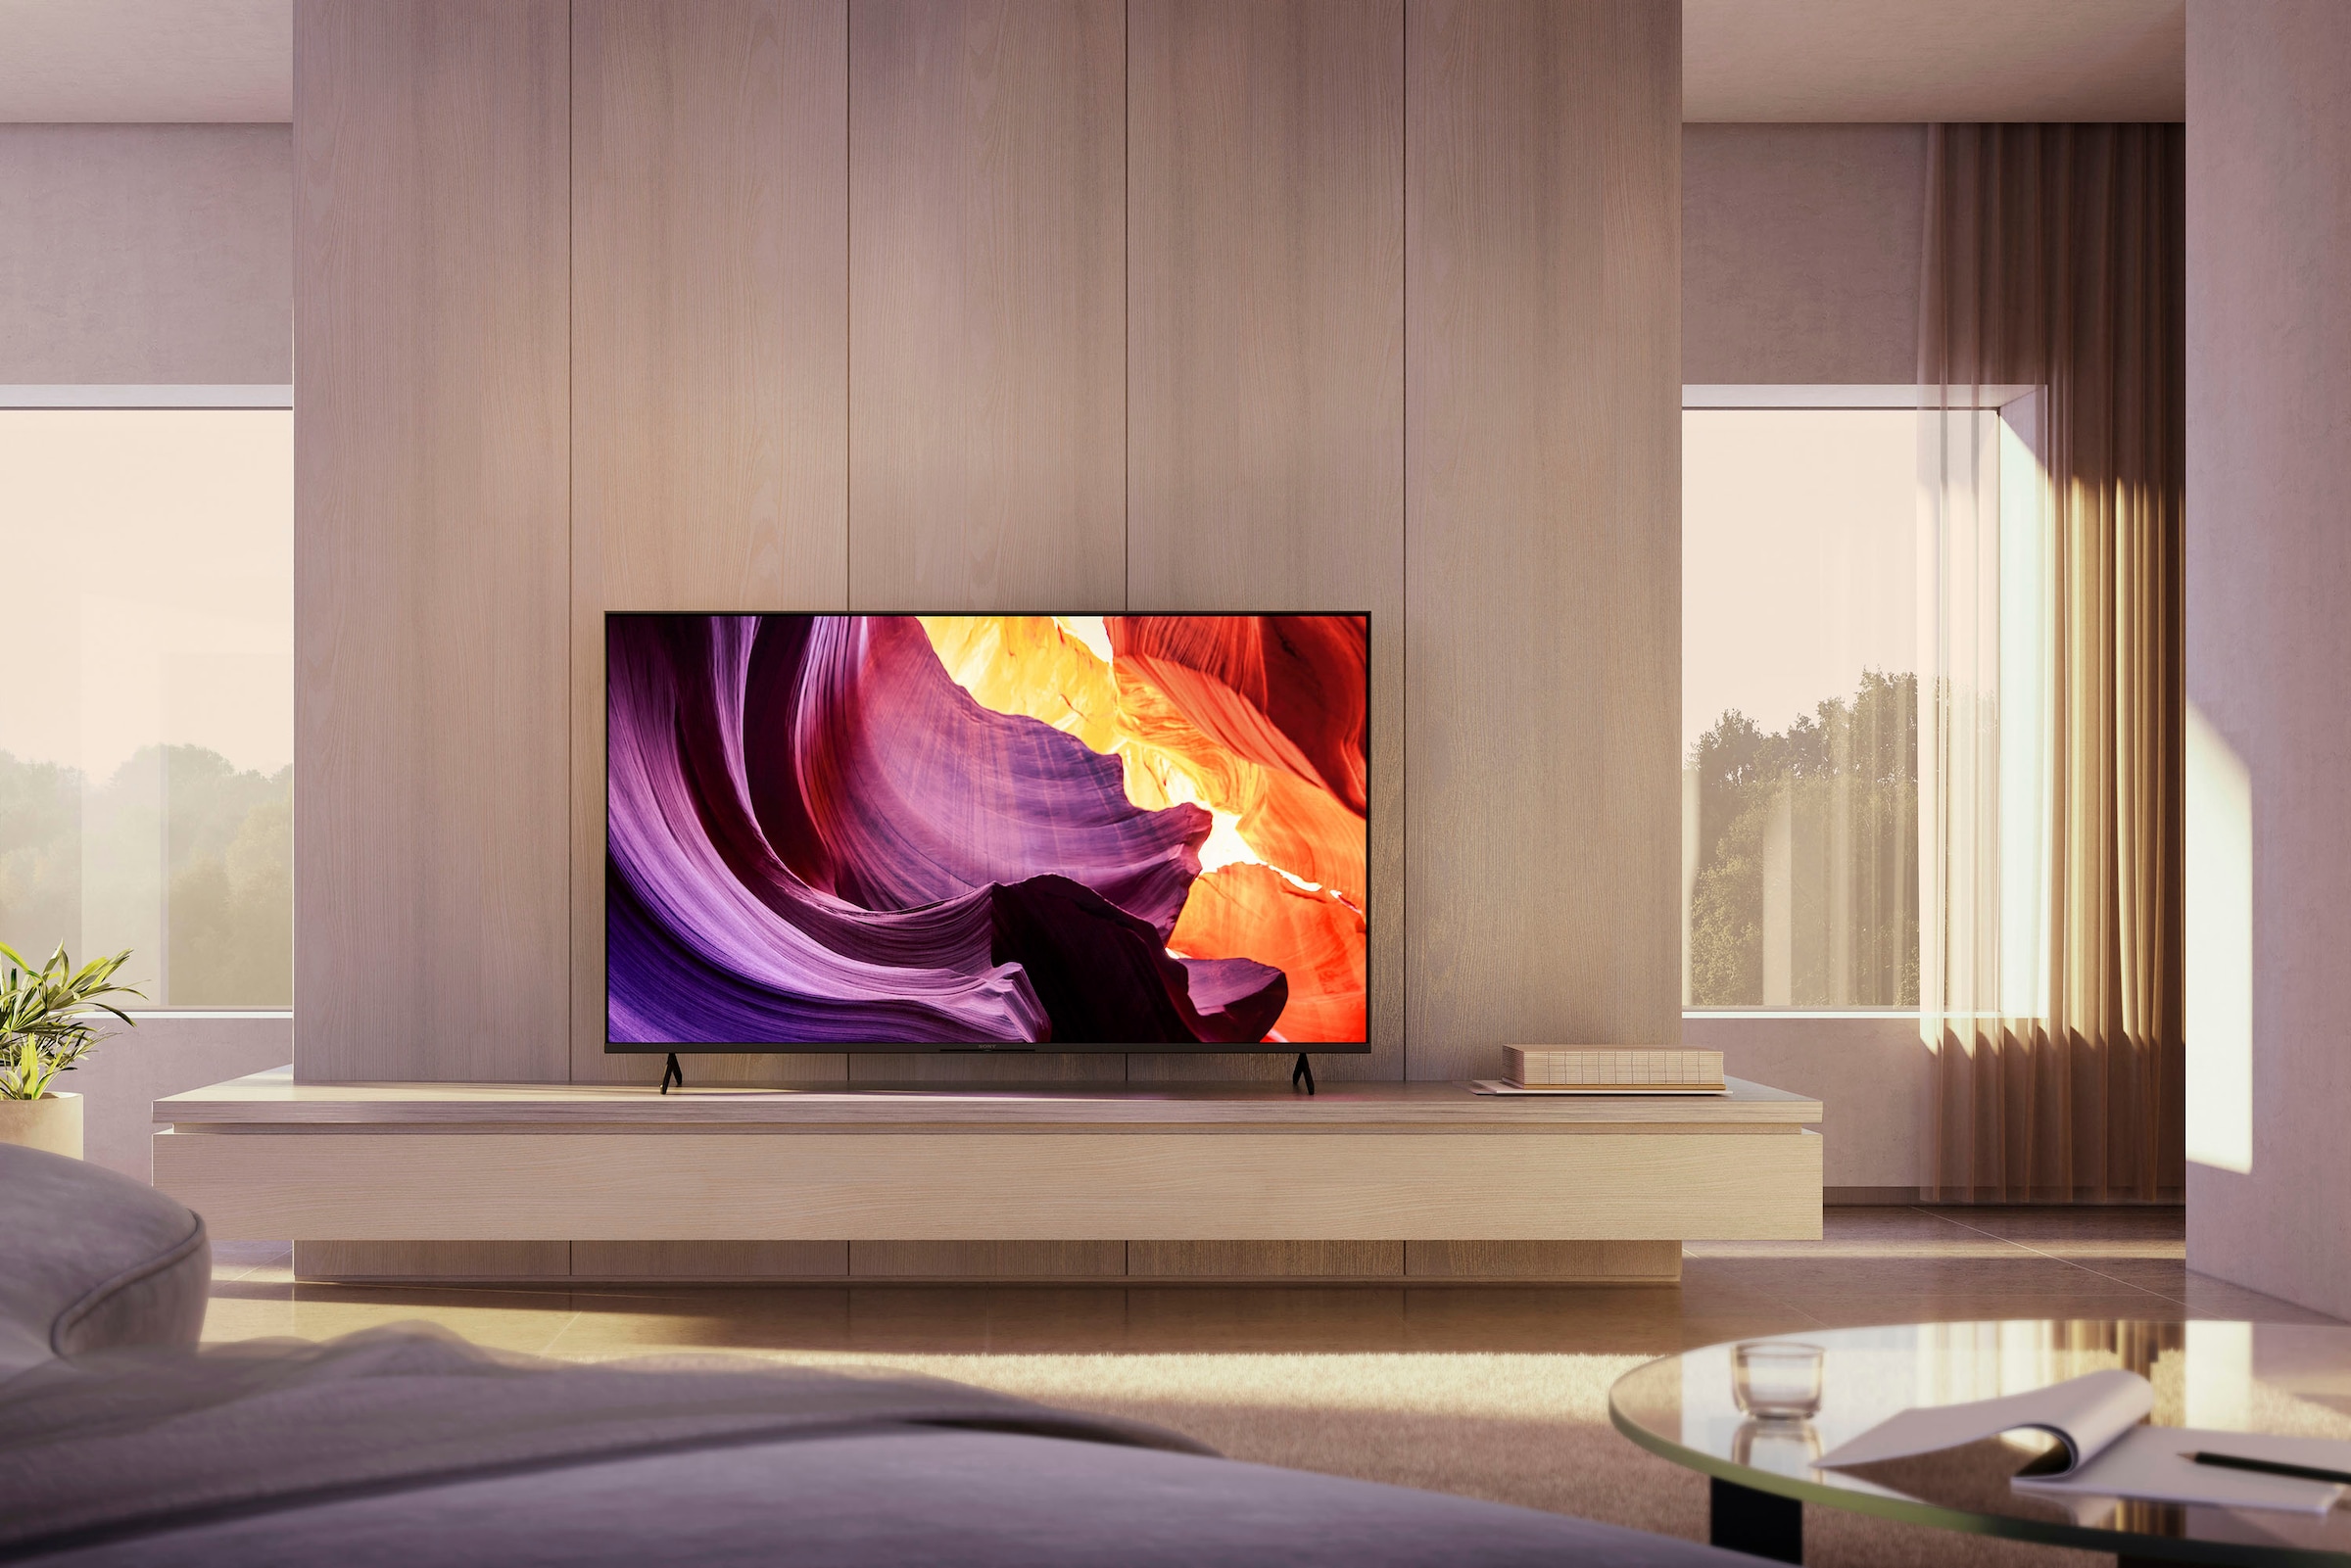 Sony LCD-LED Fernseher, 108 cm/43 Zoll, 4K Ultra HD, Smart-TV-Google TV